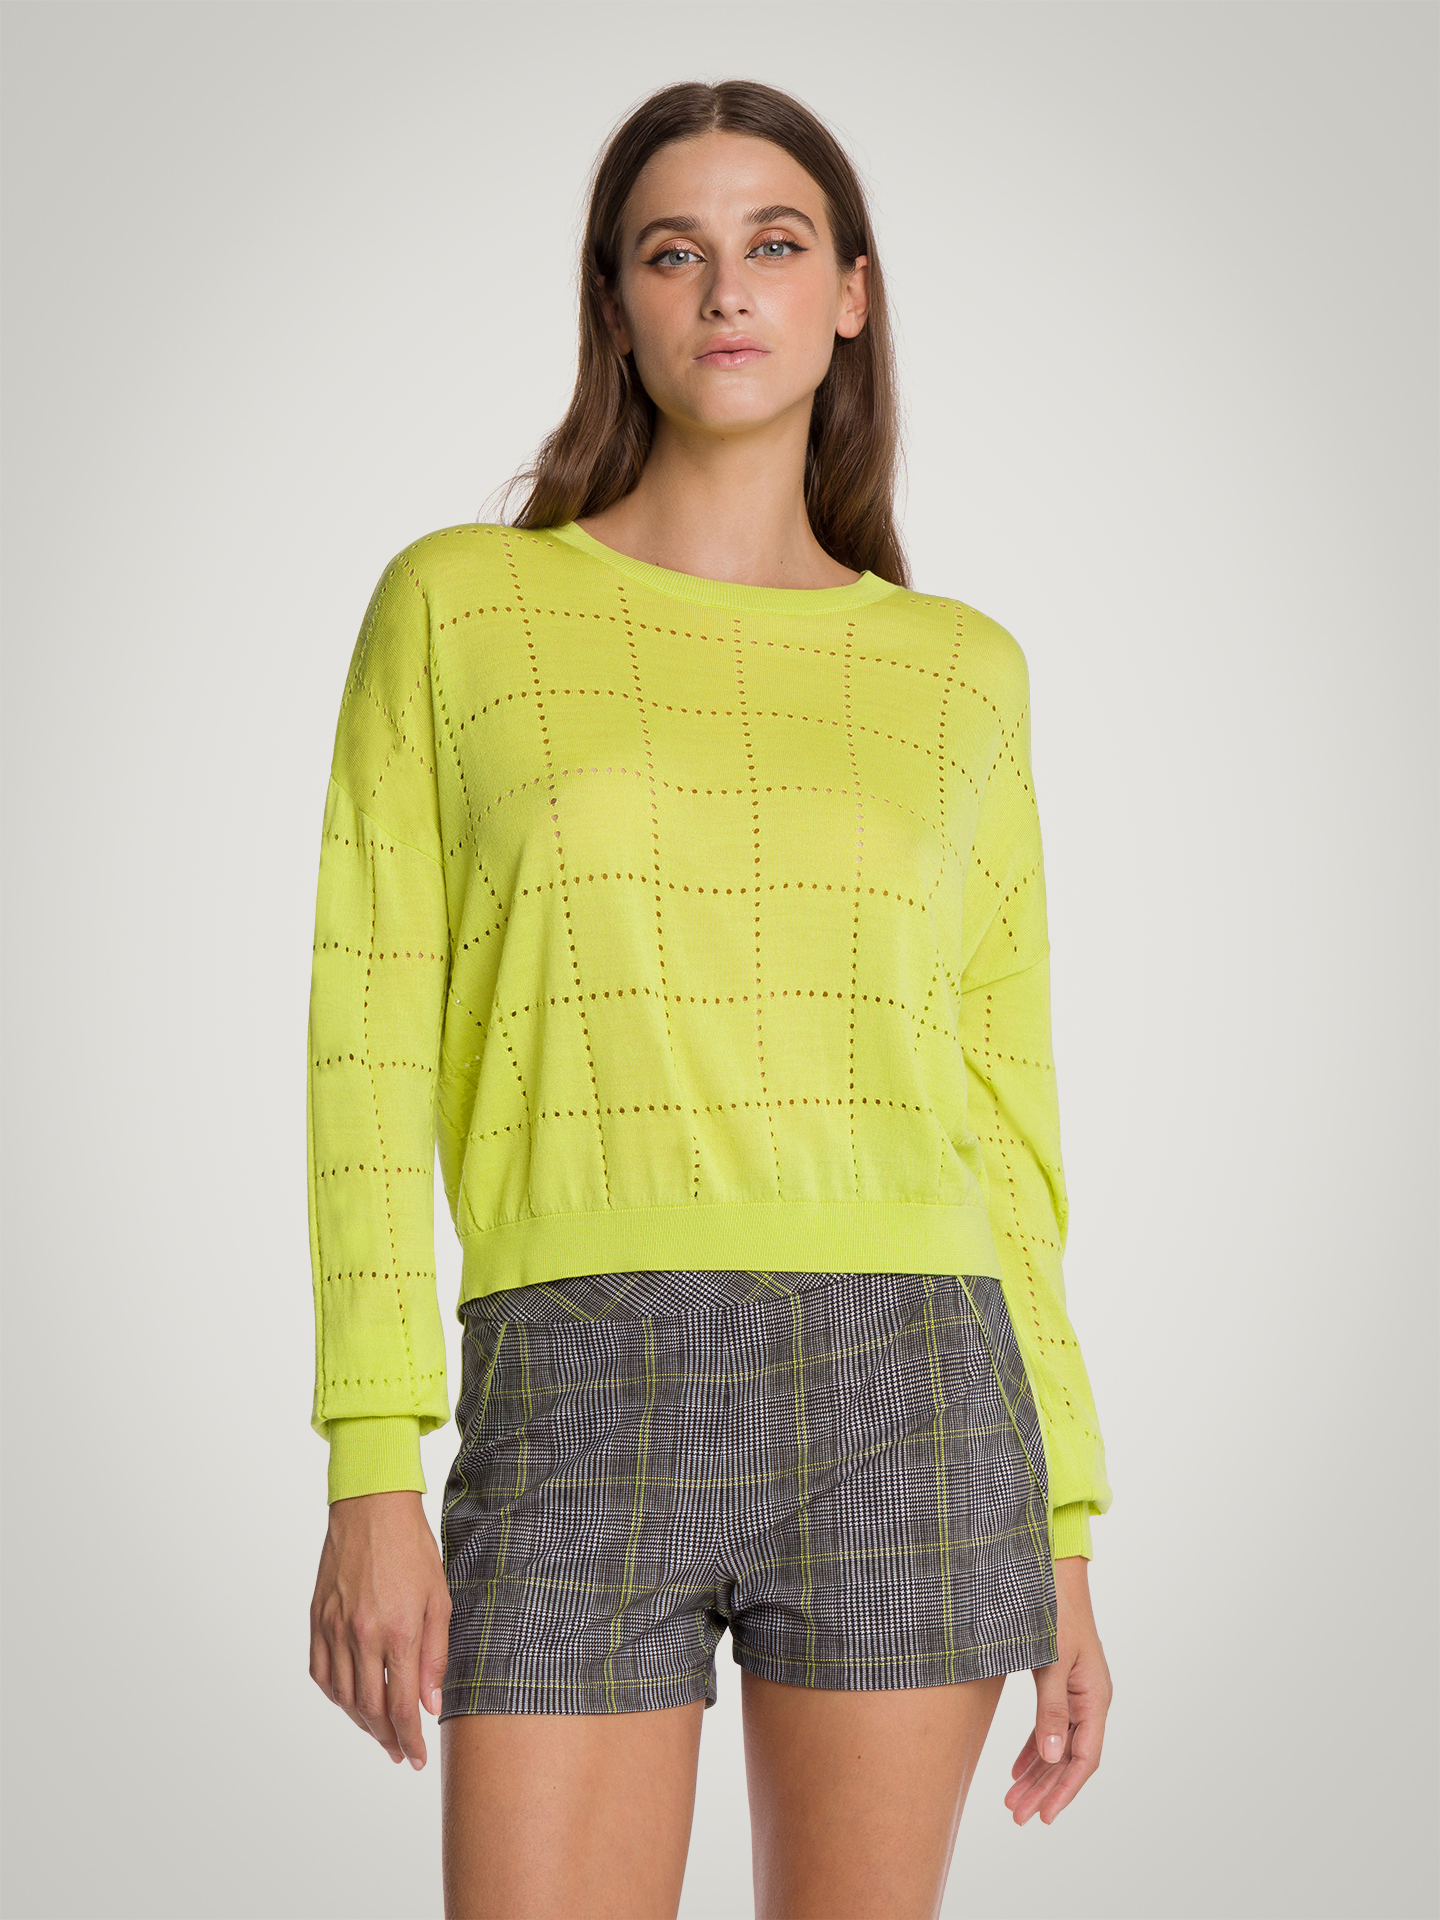 Wolford - Summer Knit Top Long Sleeves, Frau, paradise green, Größe: M günstig online kaufen